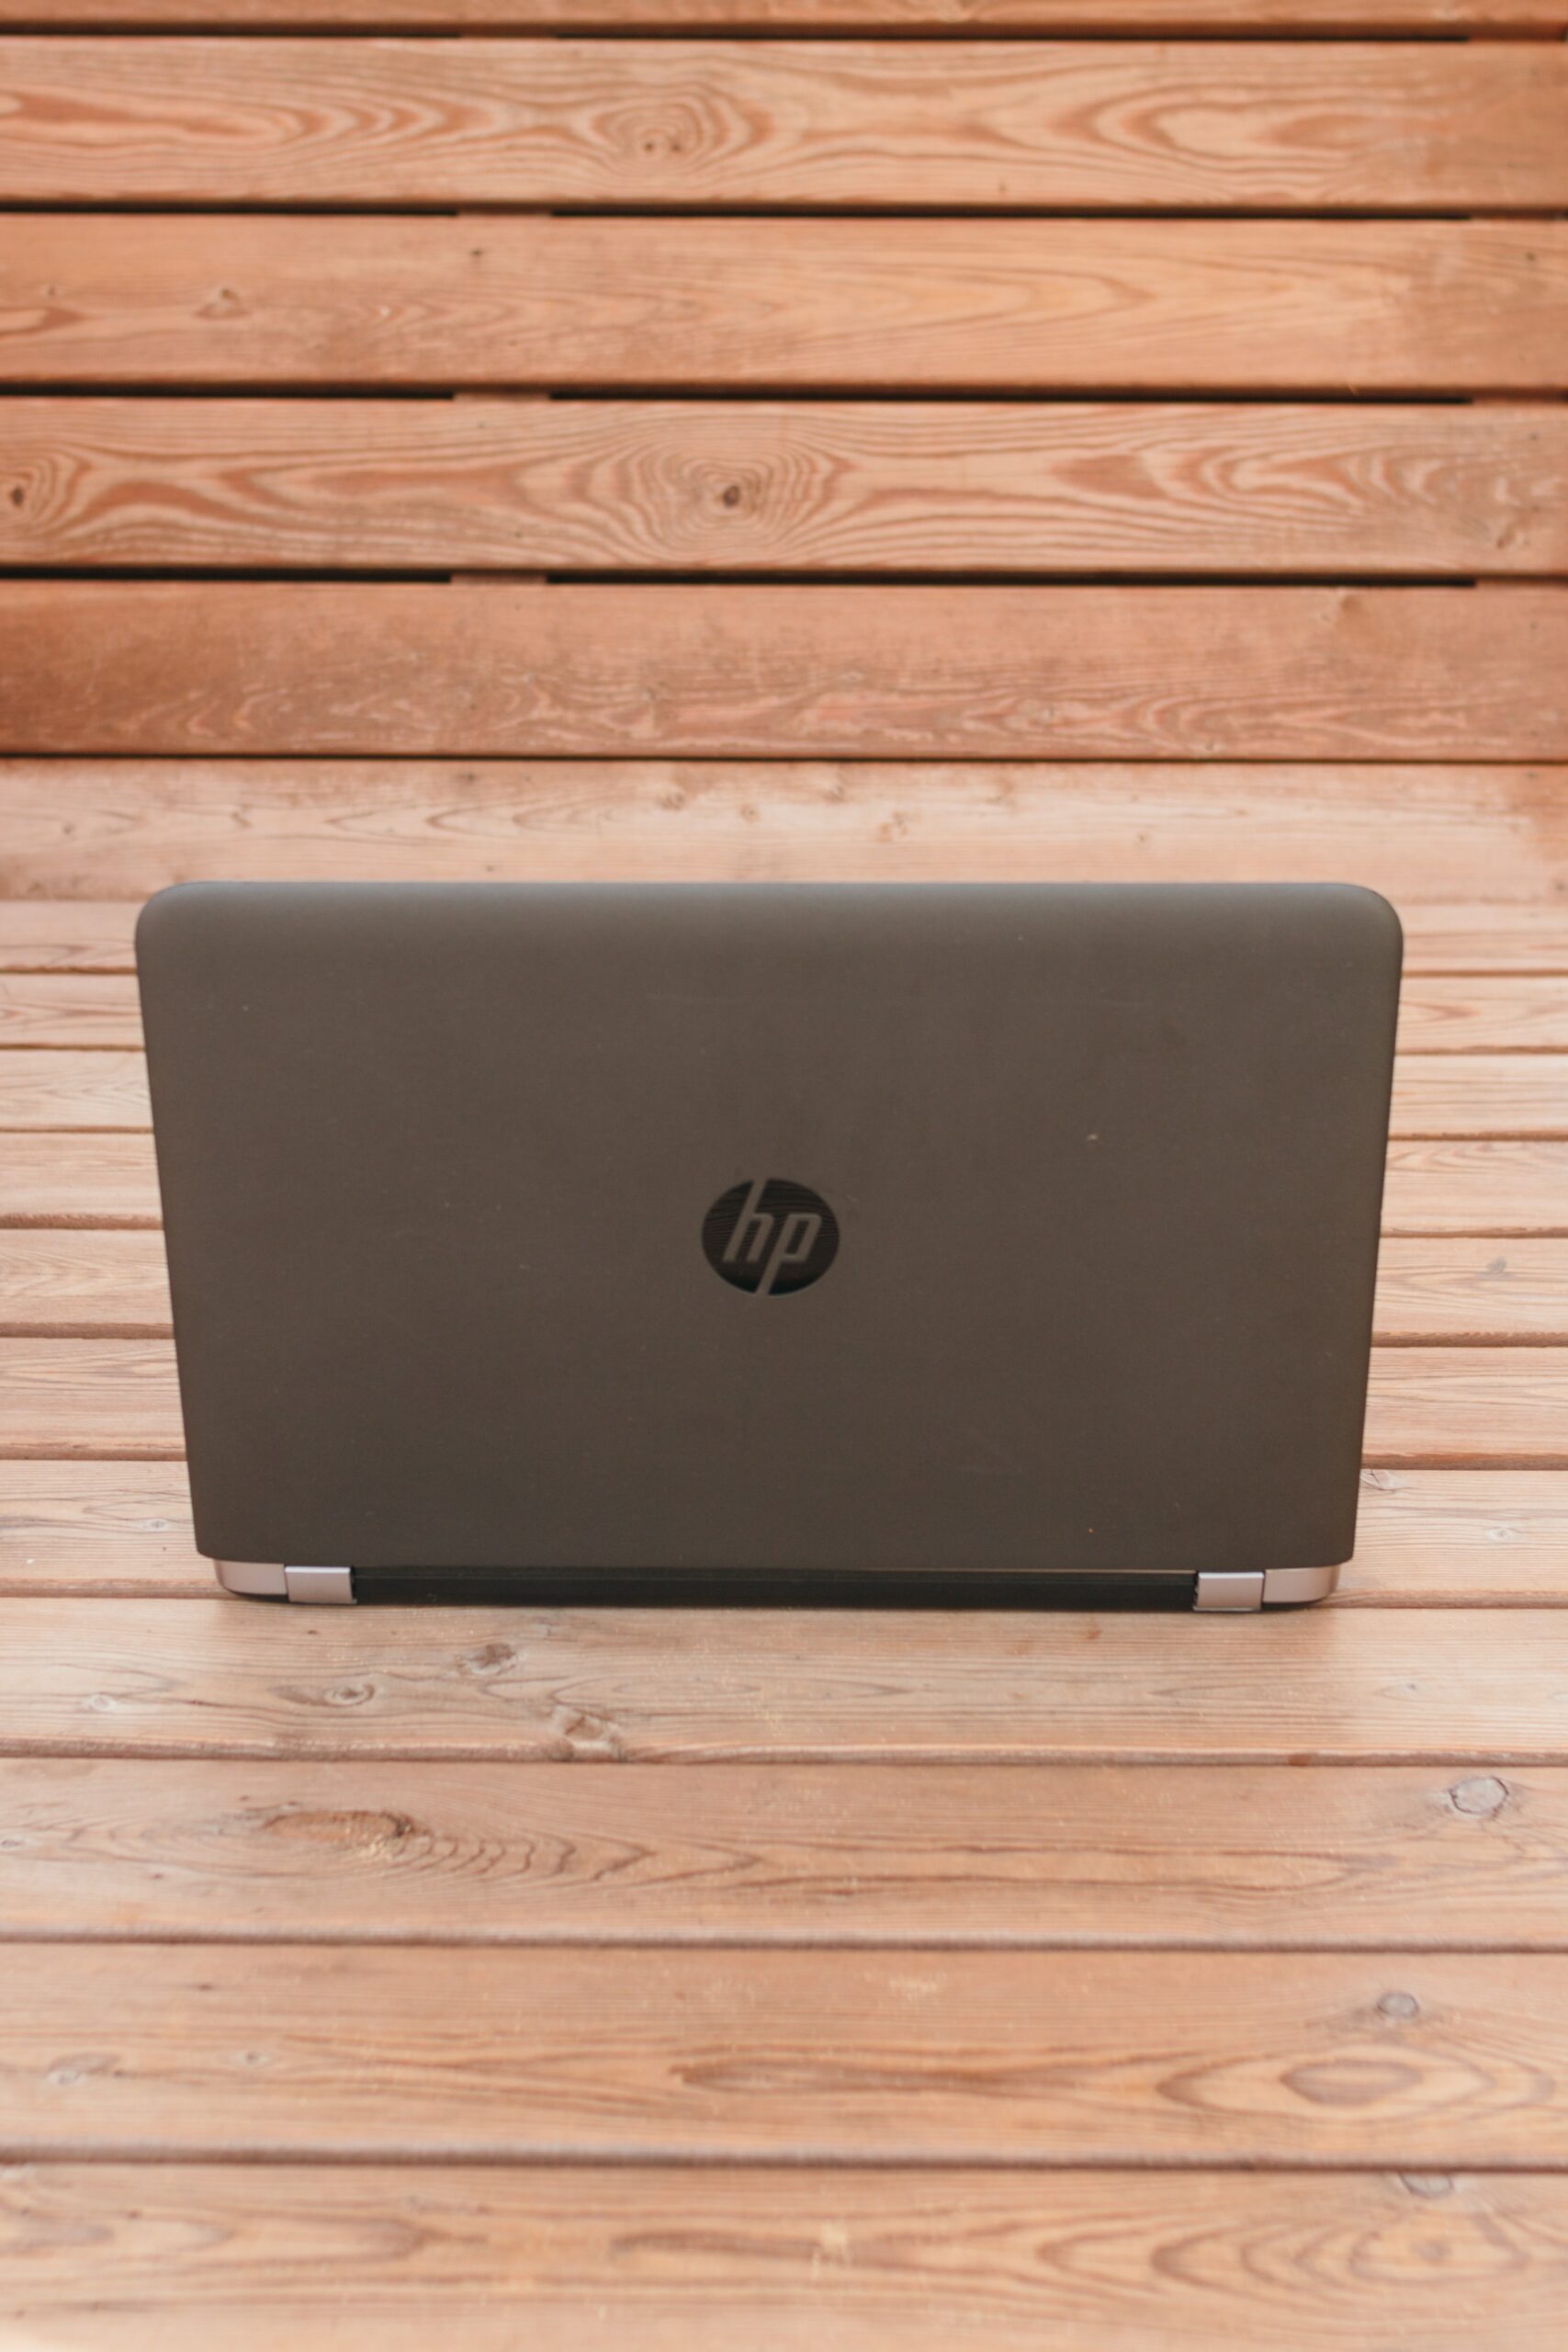 Hewlett Packard Laptop Not Turning On